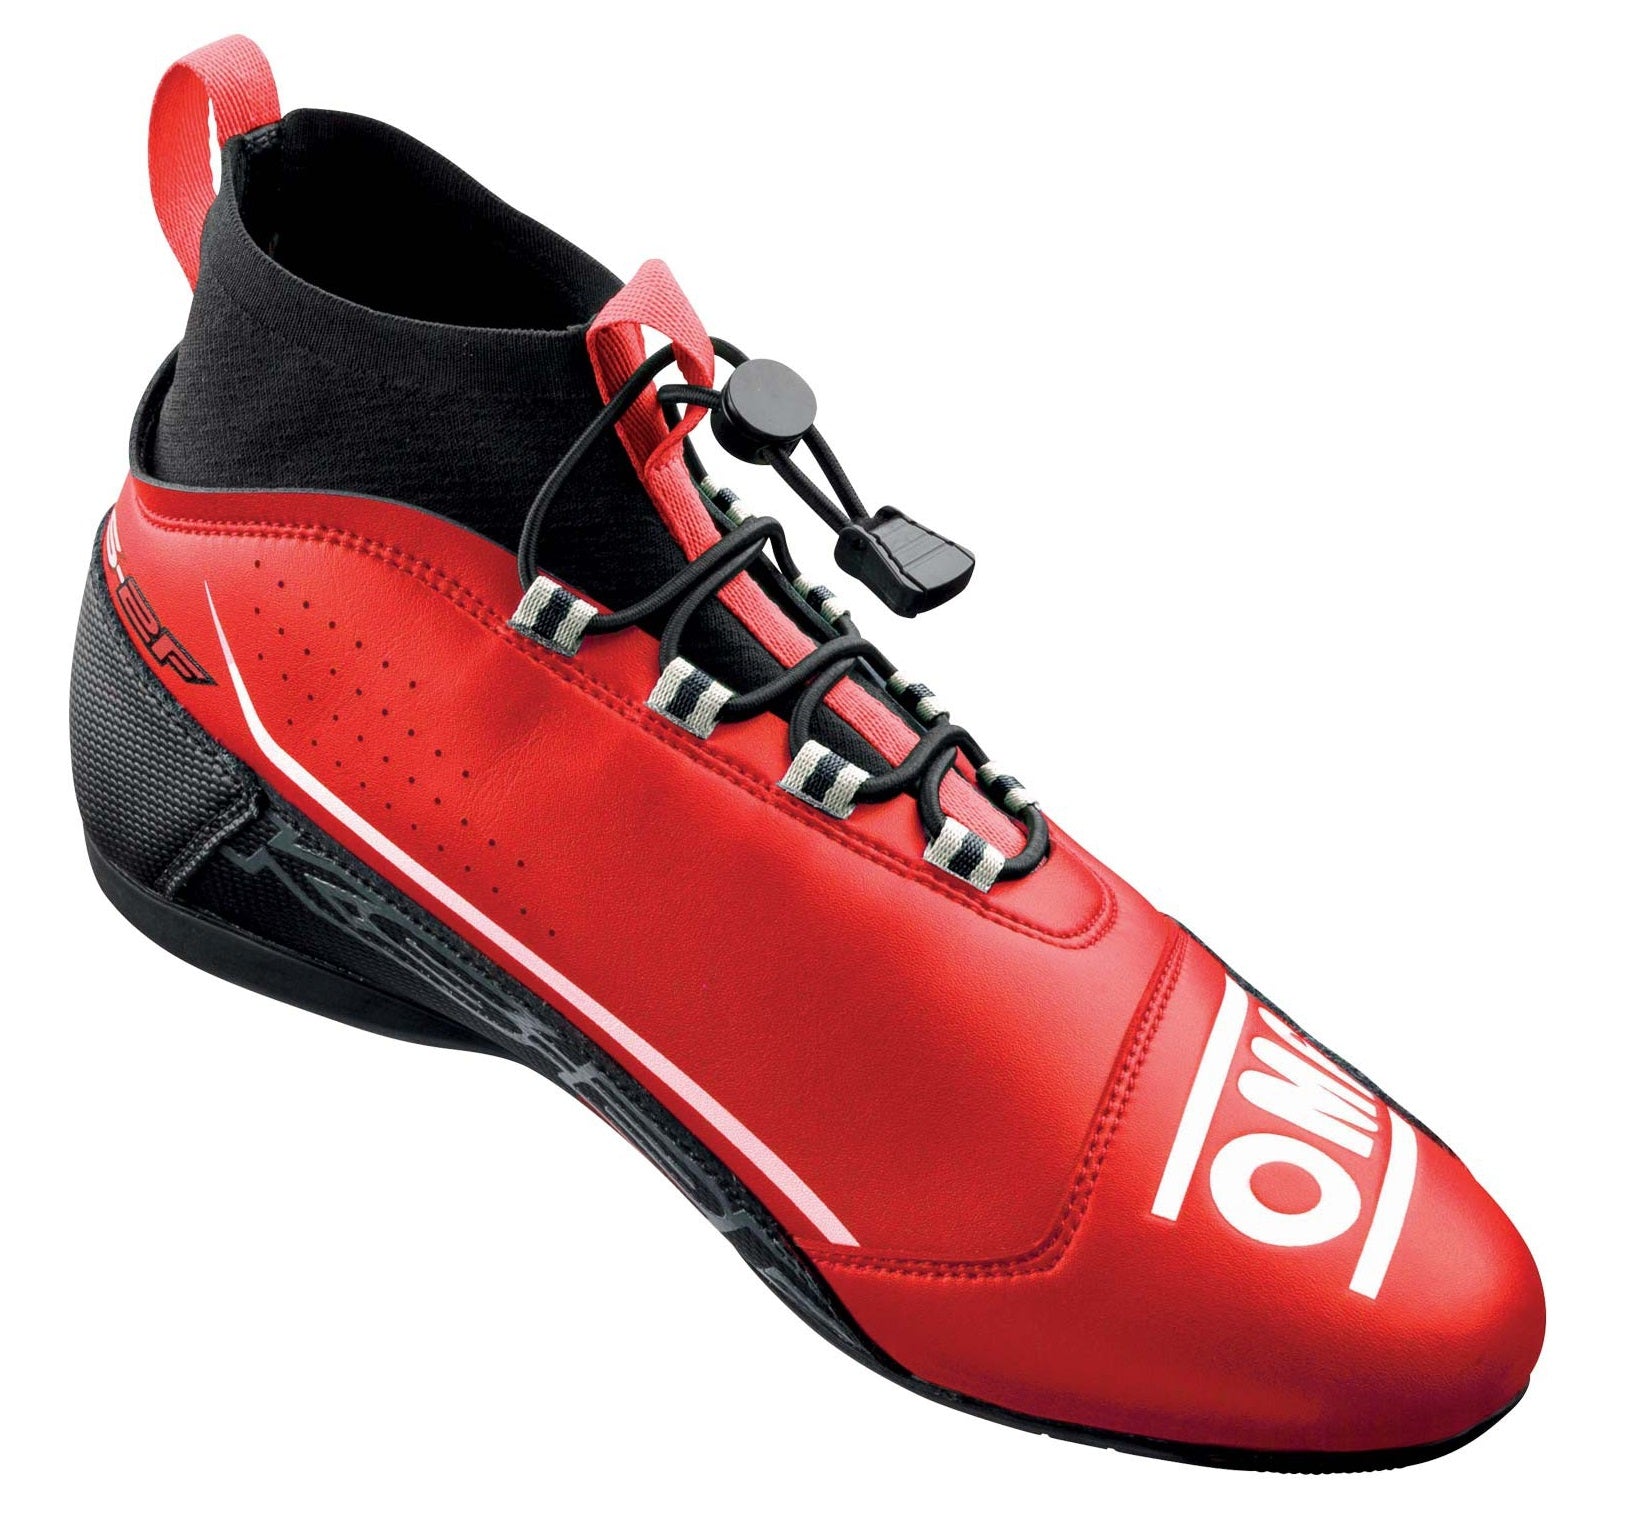 OMP KC0-0830-A01-060-45 KS-2F Karting shoes, red/black, size 45 Photo-1 